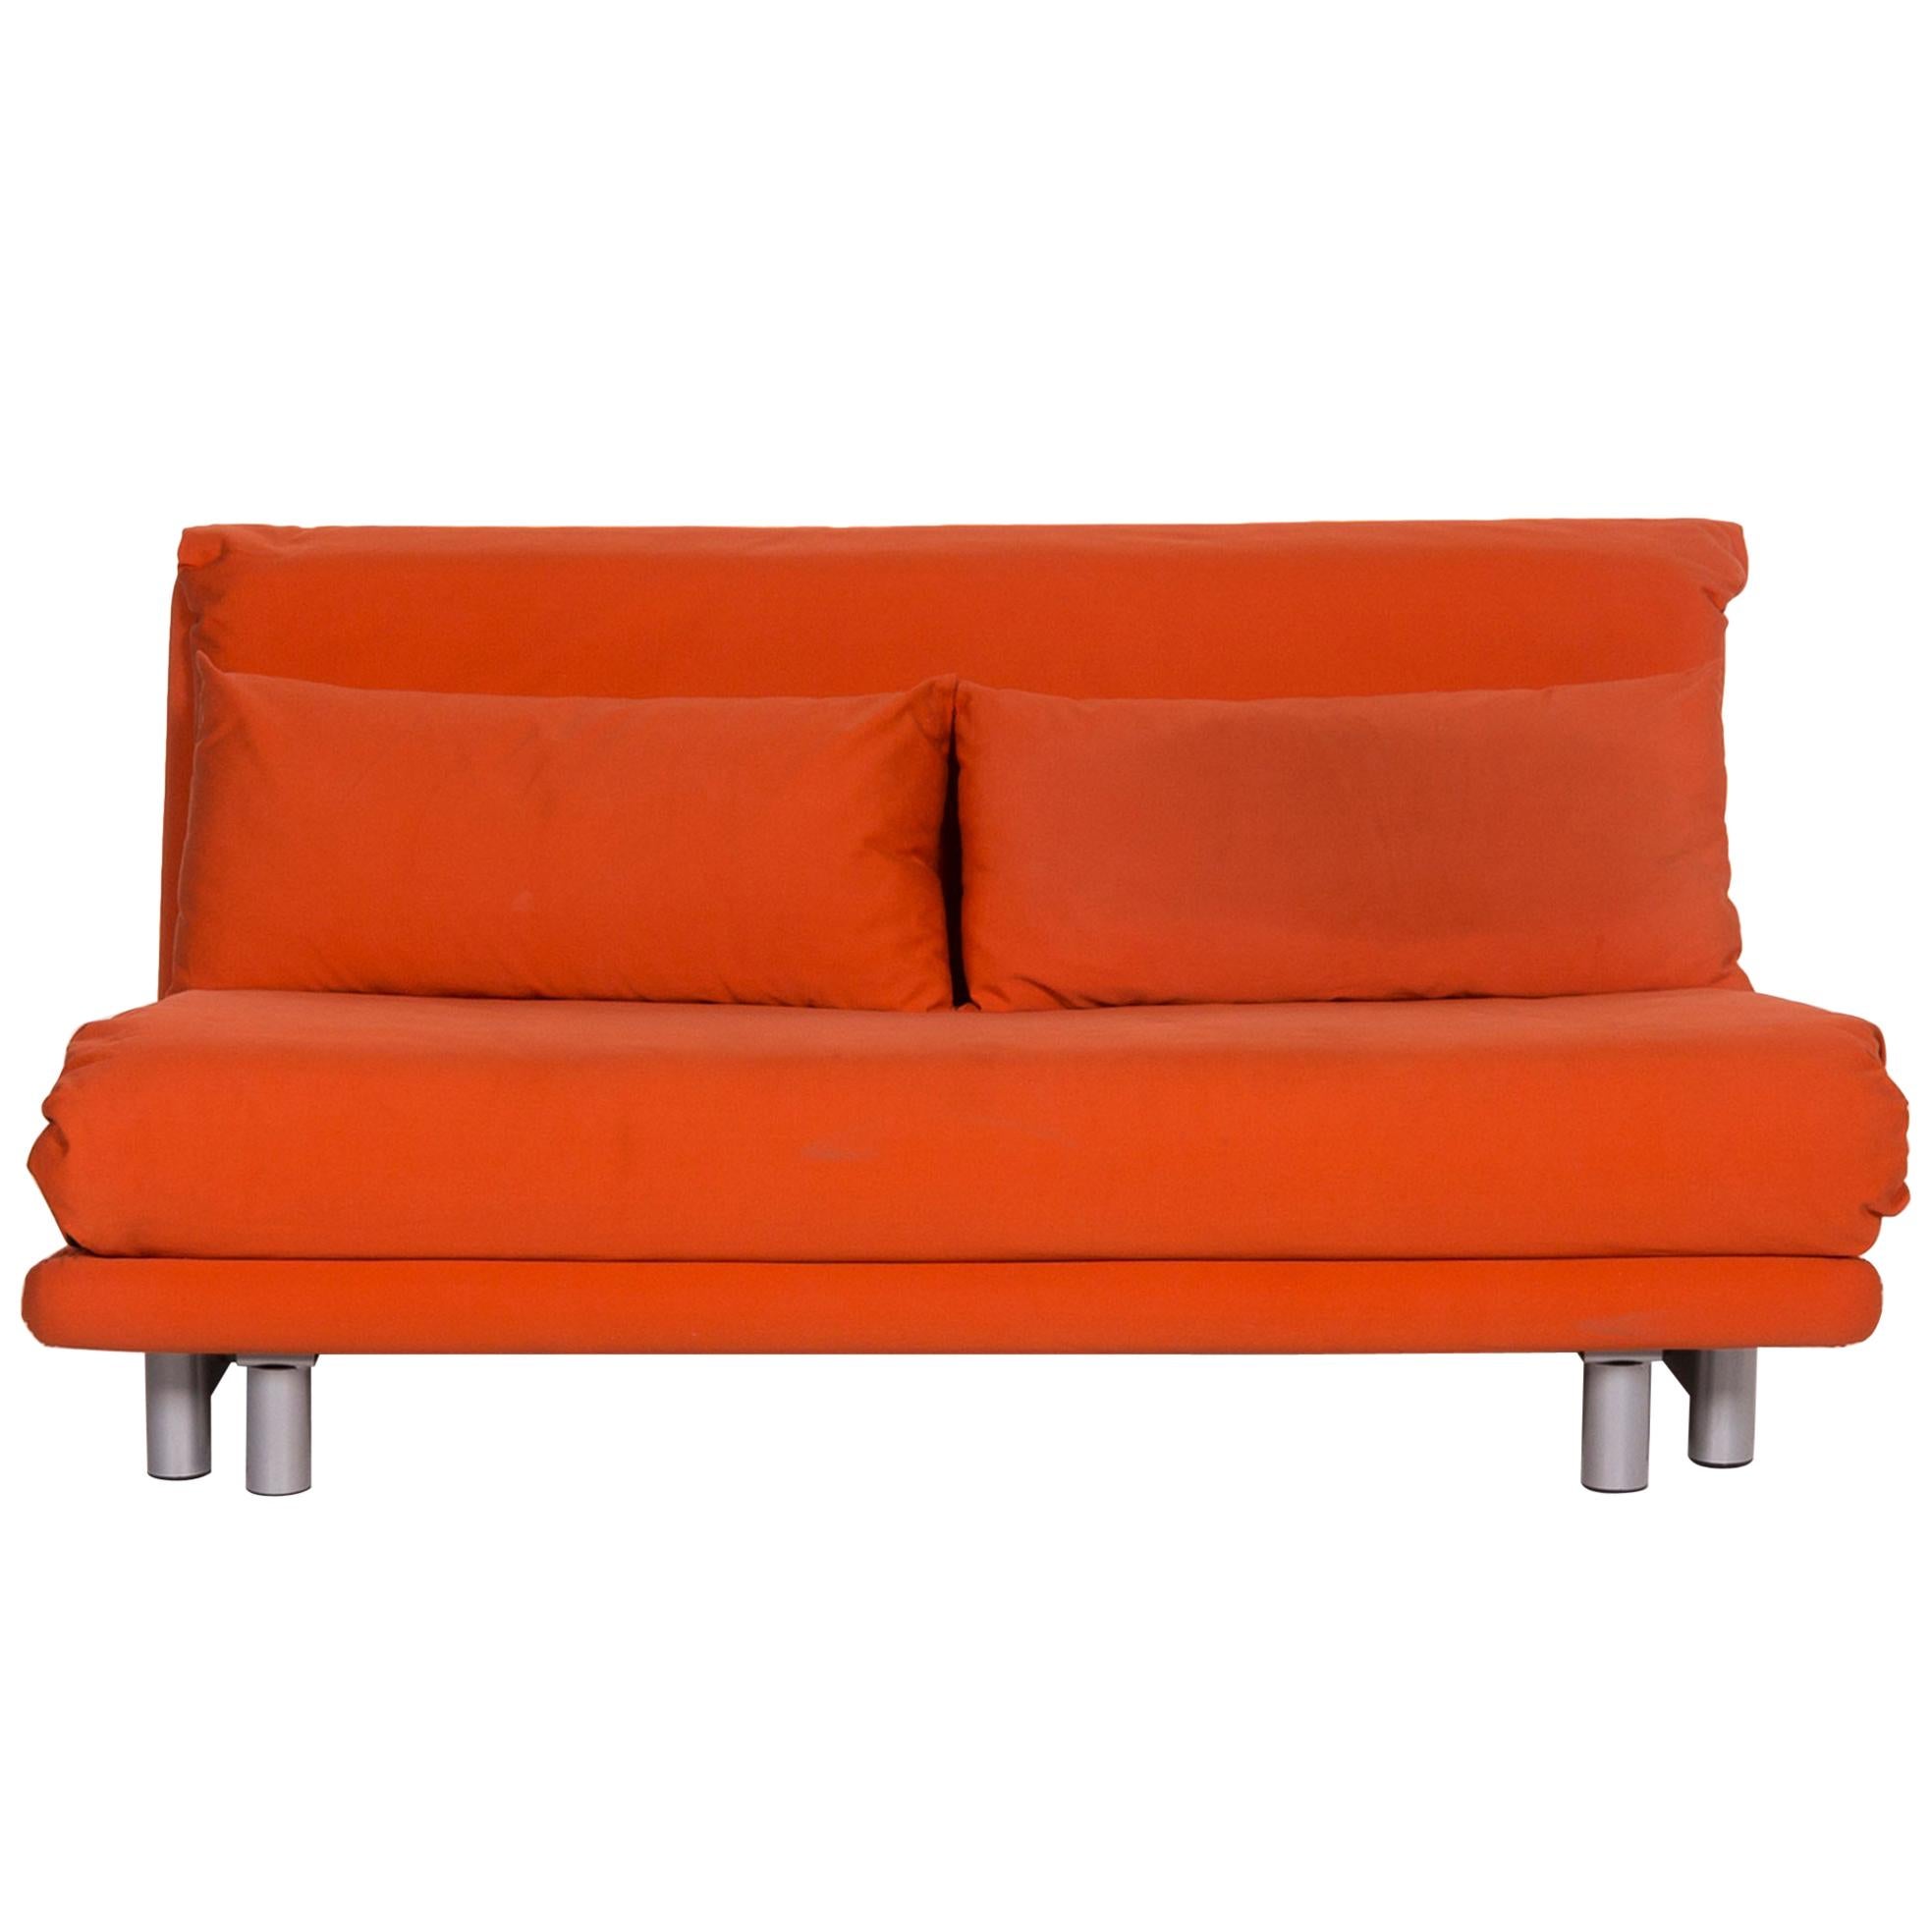 Ligne Roset Multy Fabric Sofa Bed Orange Sofa Two-Seat Sleep Function